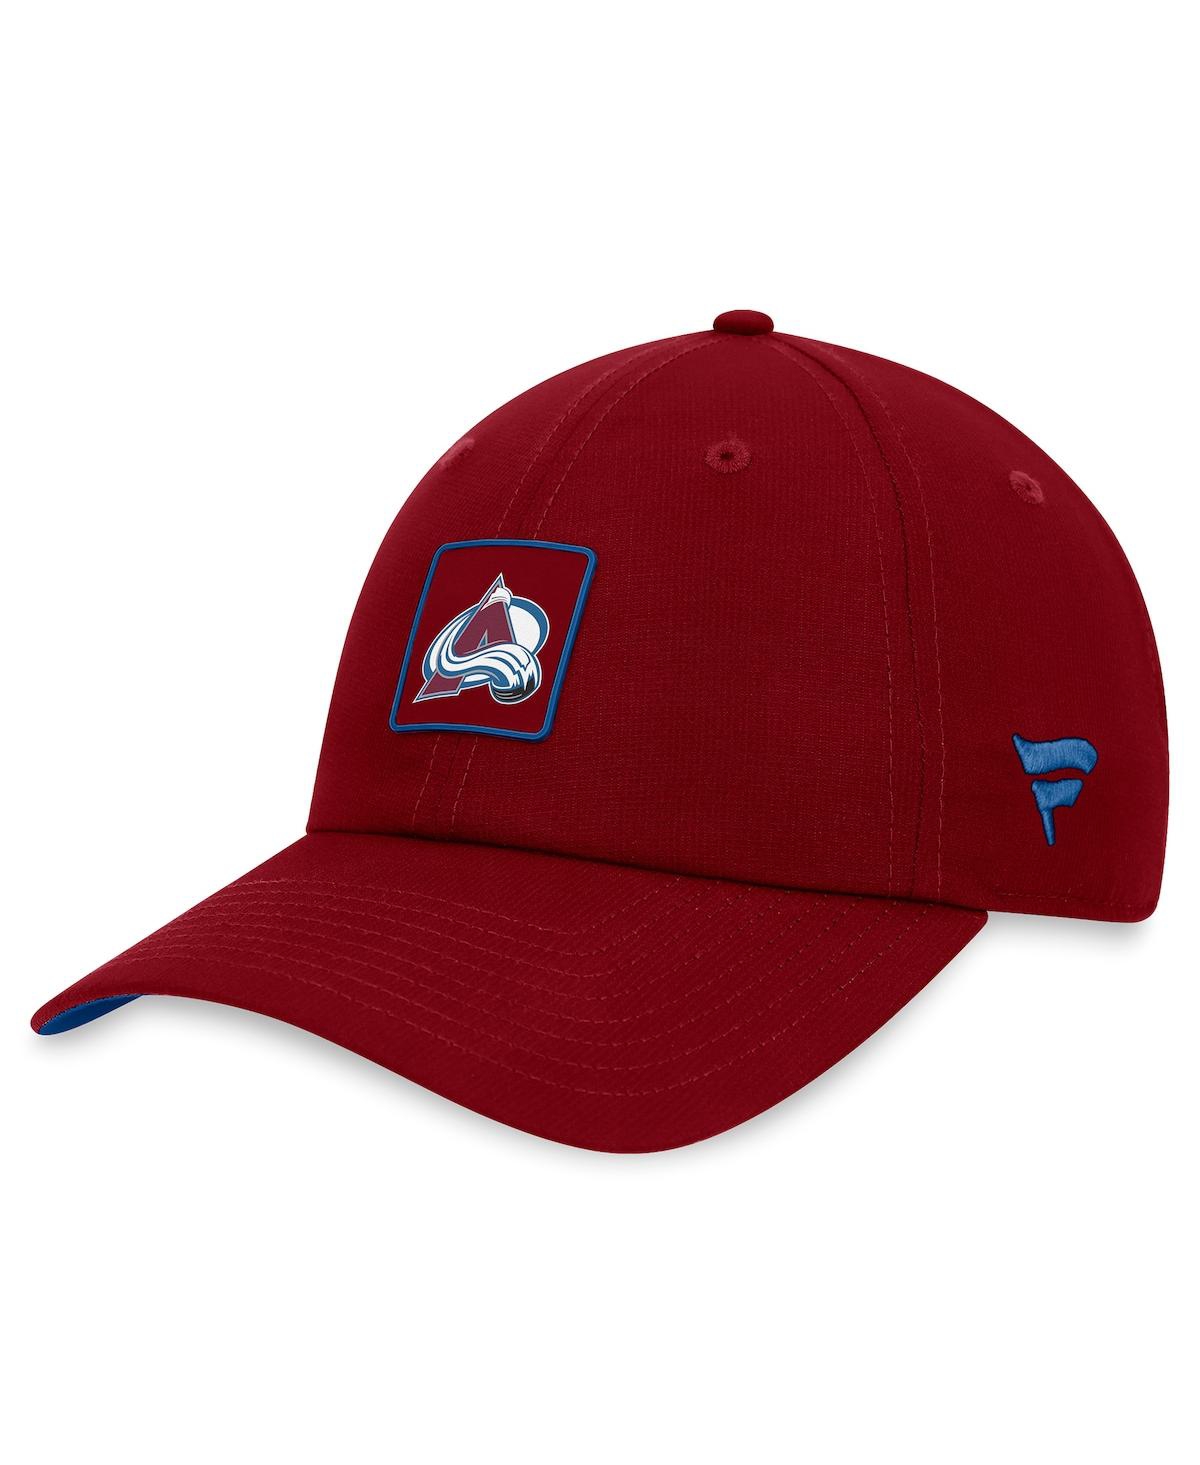 Shop Fanatics Men's  Burgundy Colorado Avalanche Authentic Pro Rink Adjustable Hat